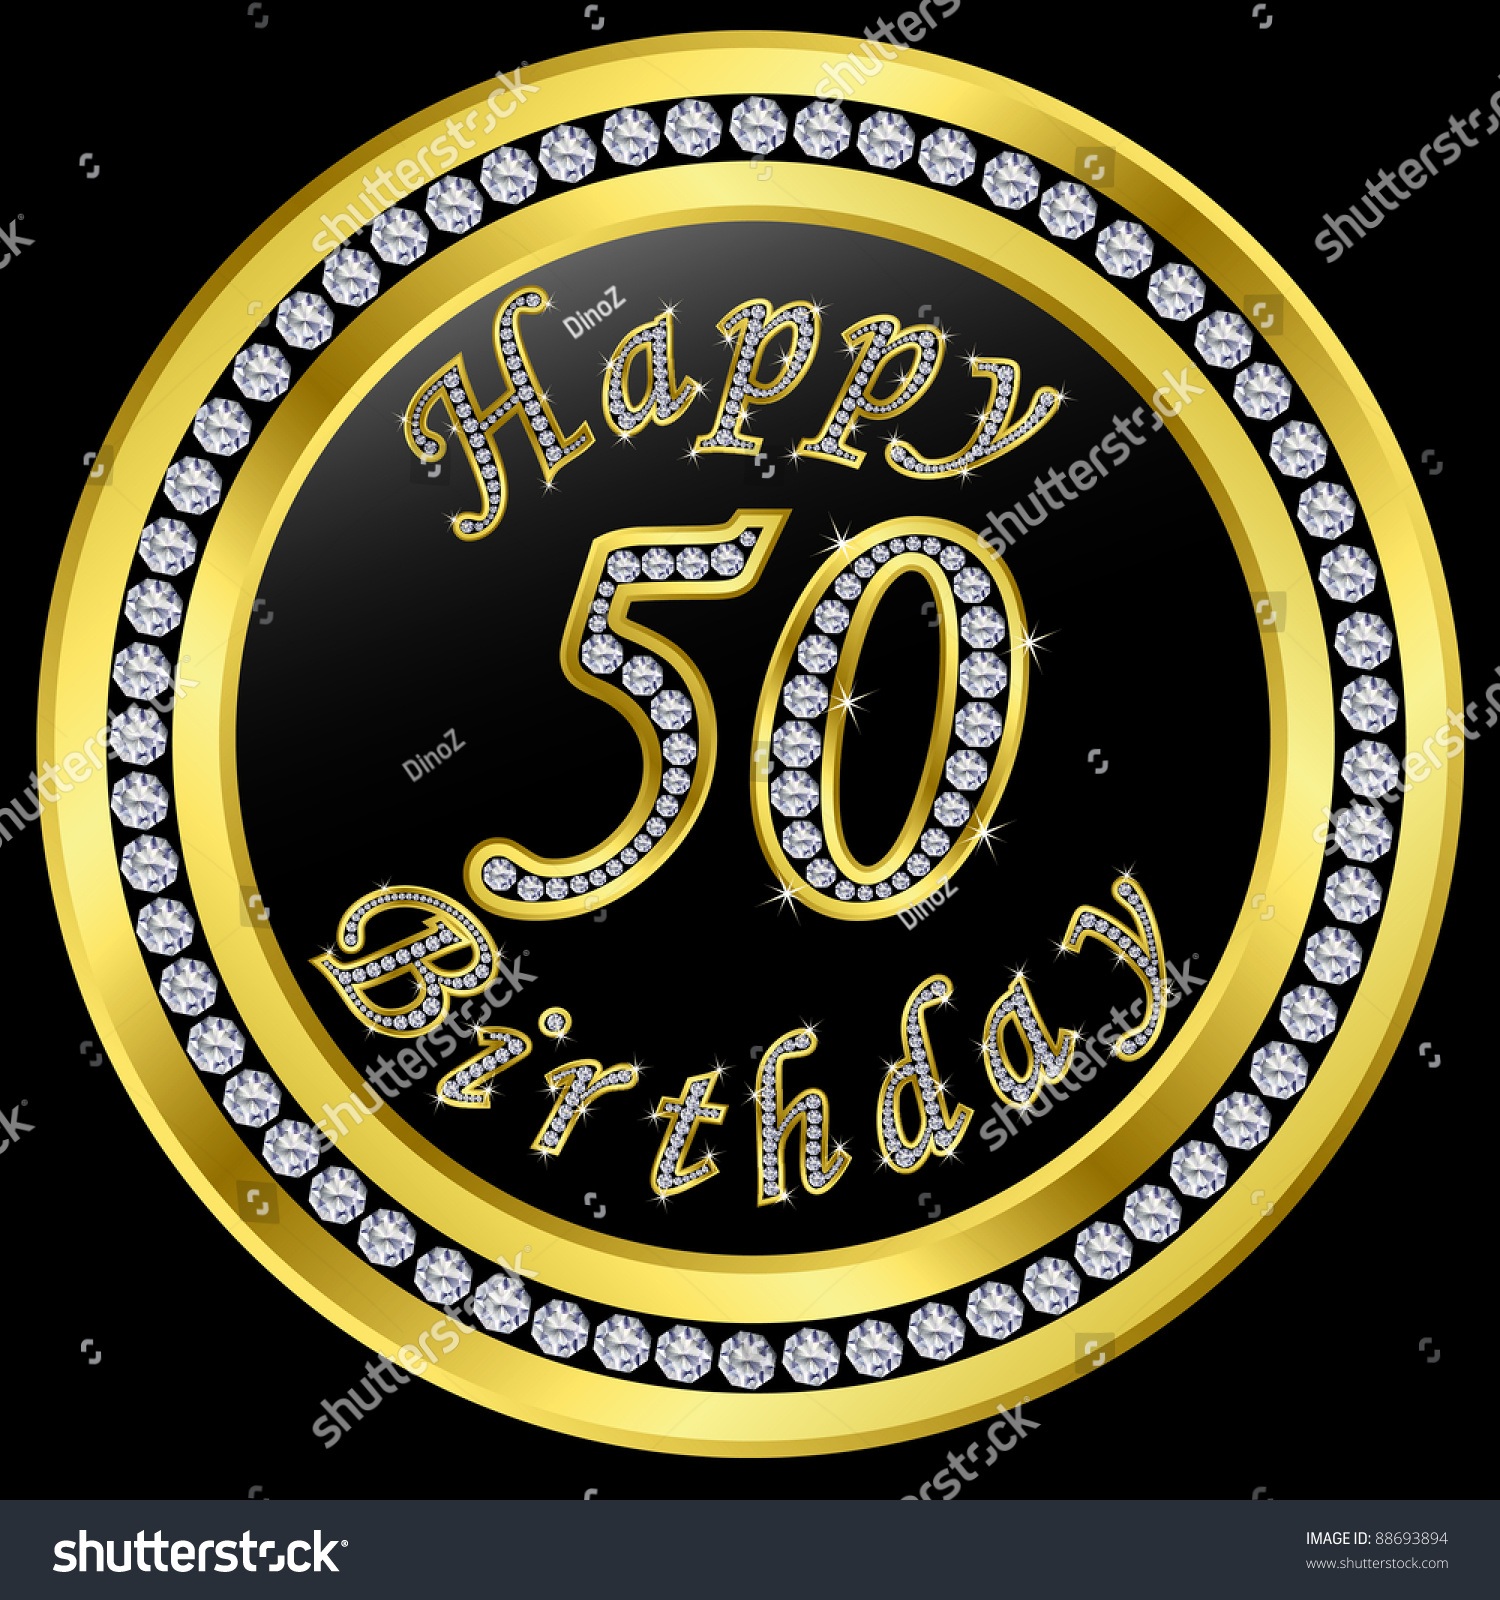 happy-50th-birthday-royalty-free-stock-photos-image-15036578